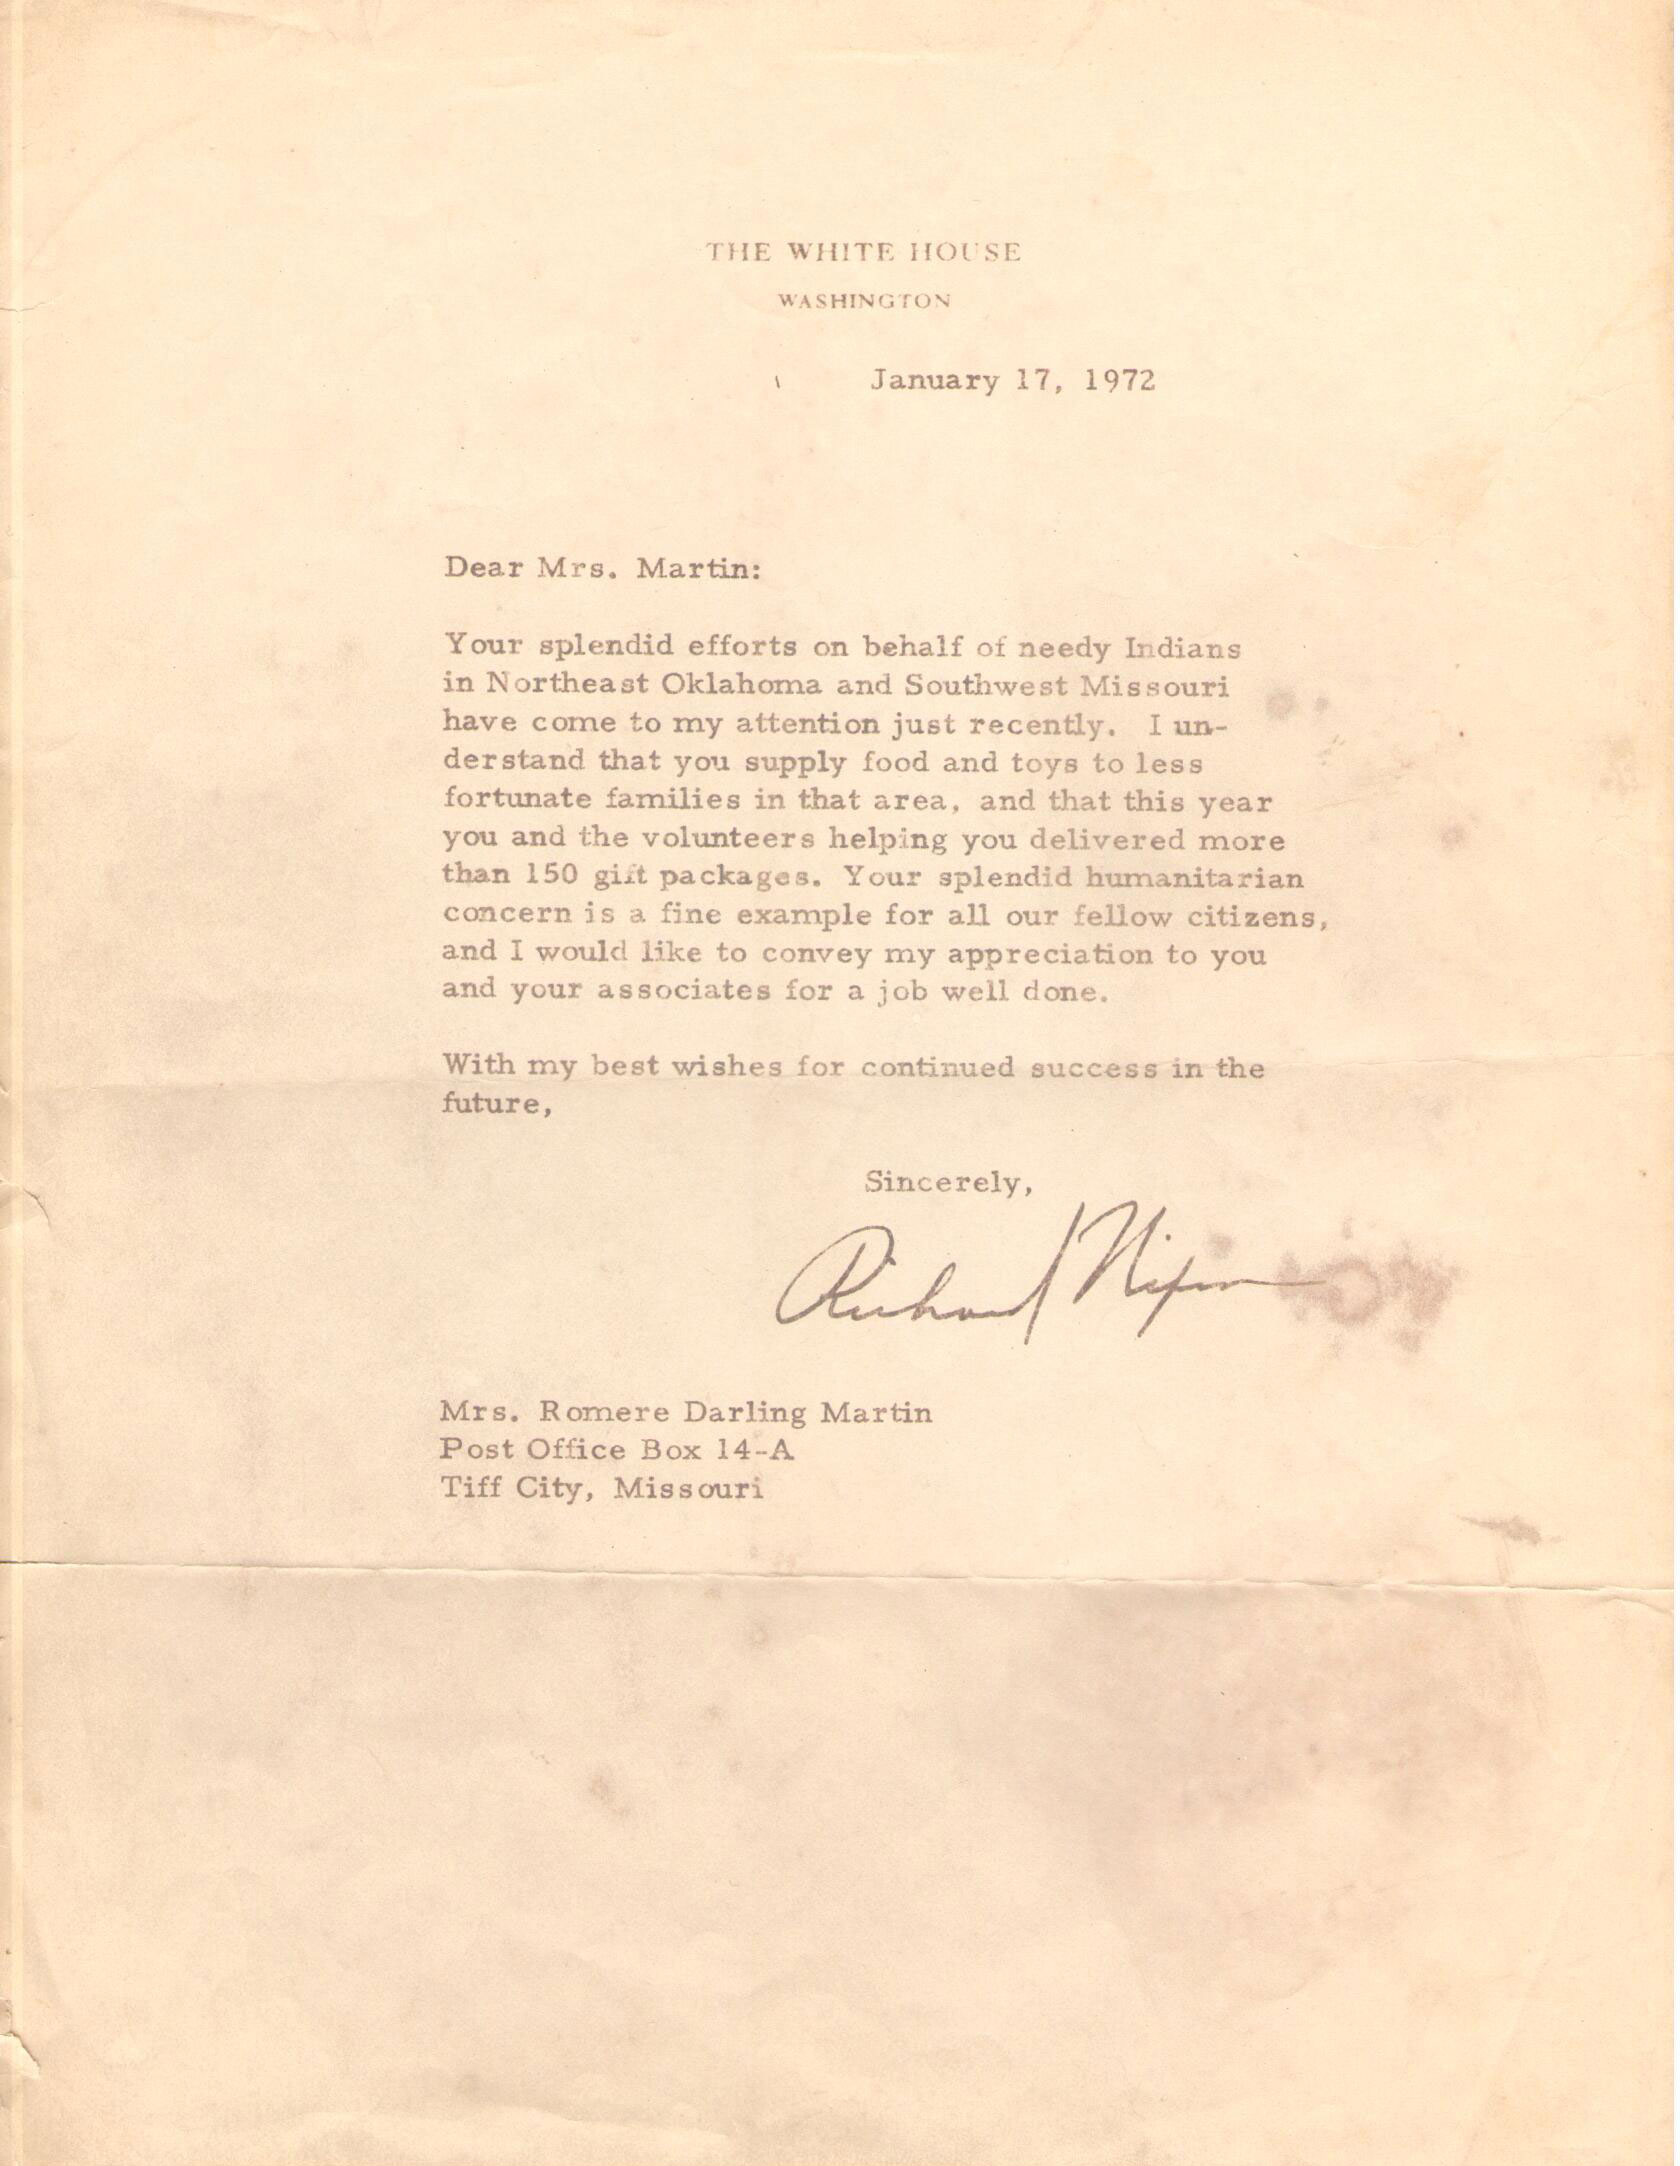 Richard Nixon Letter